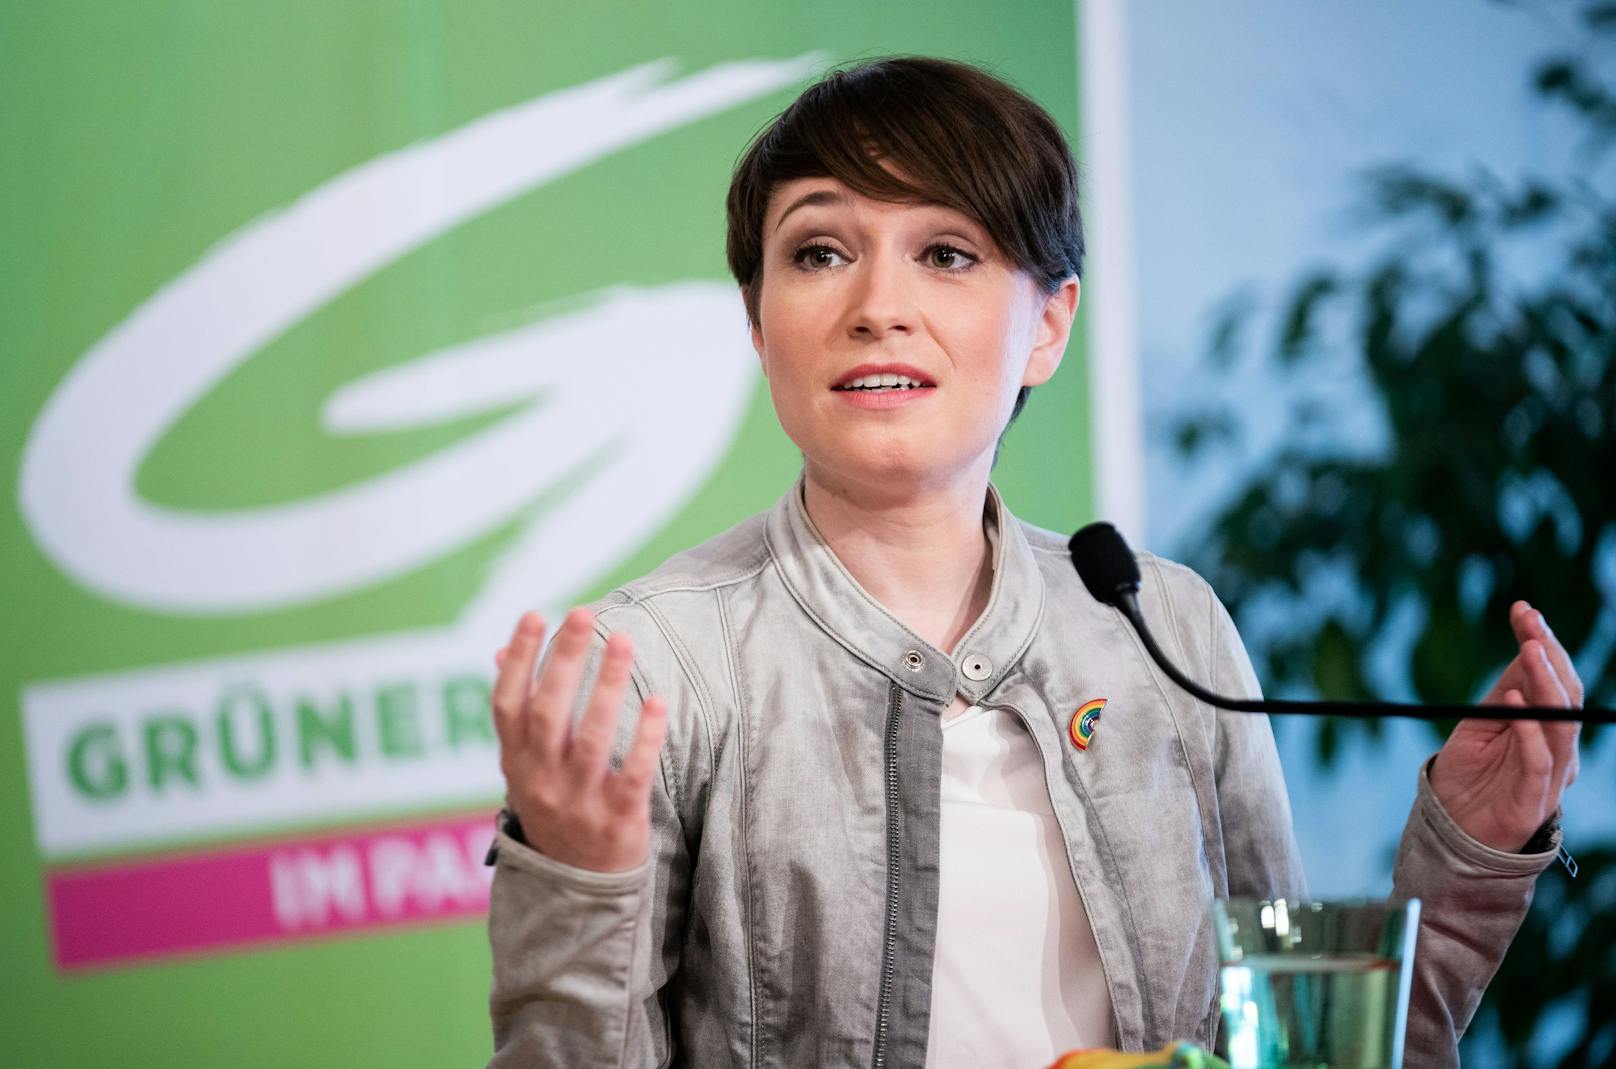 Grünen-Klubobfrau Sigrid Maurer